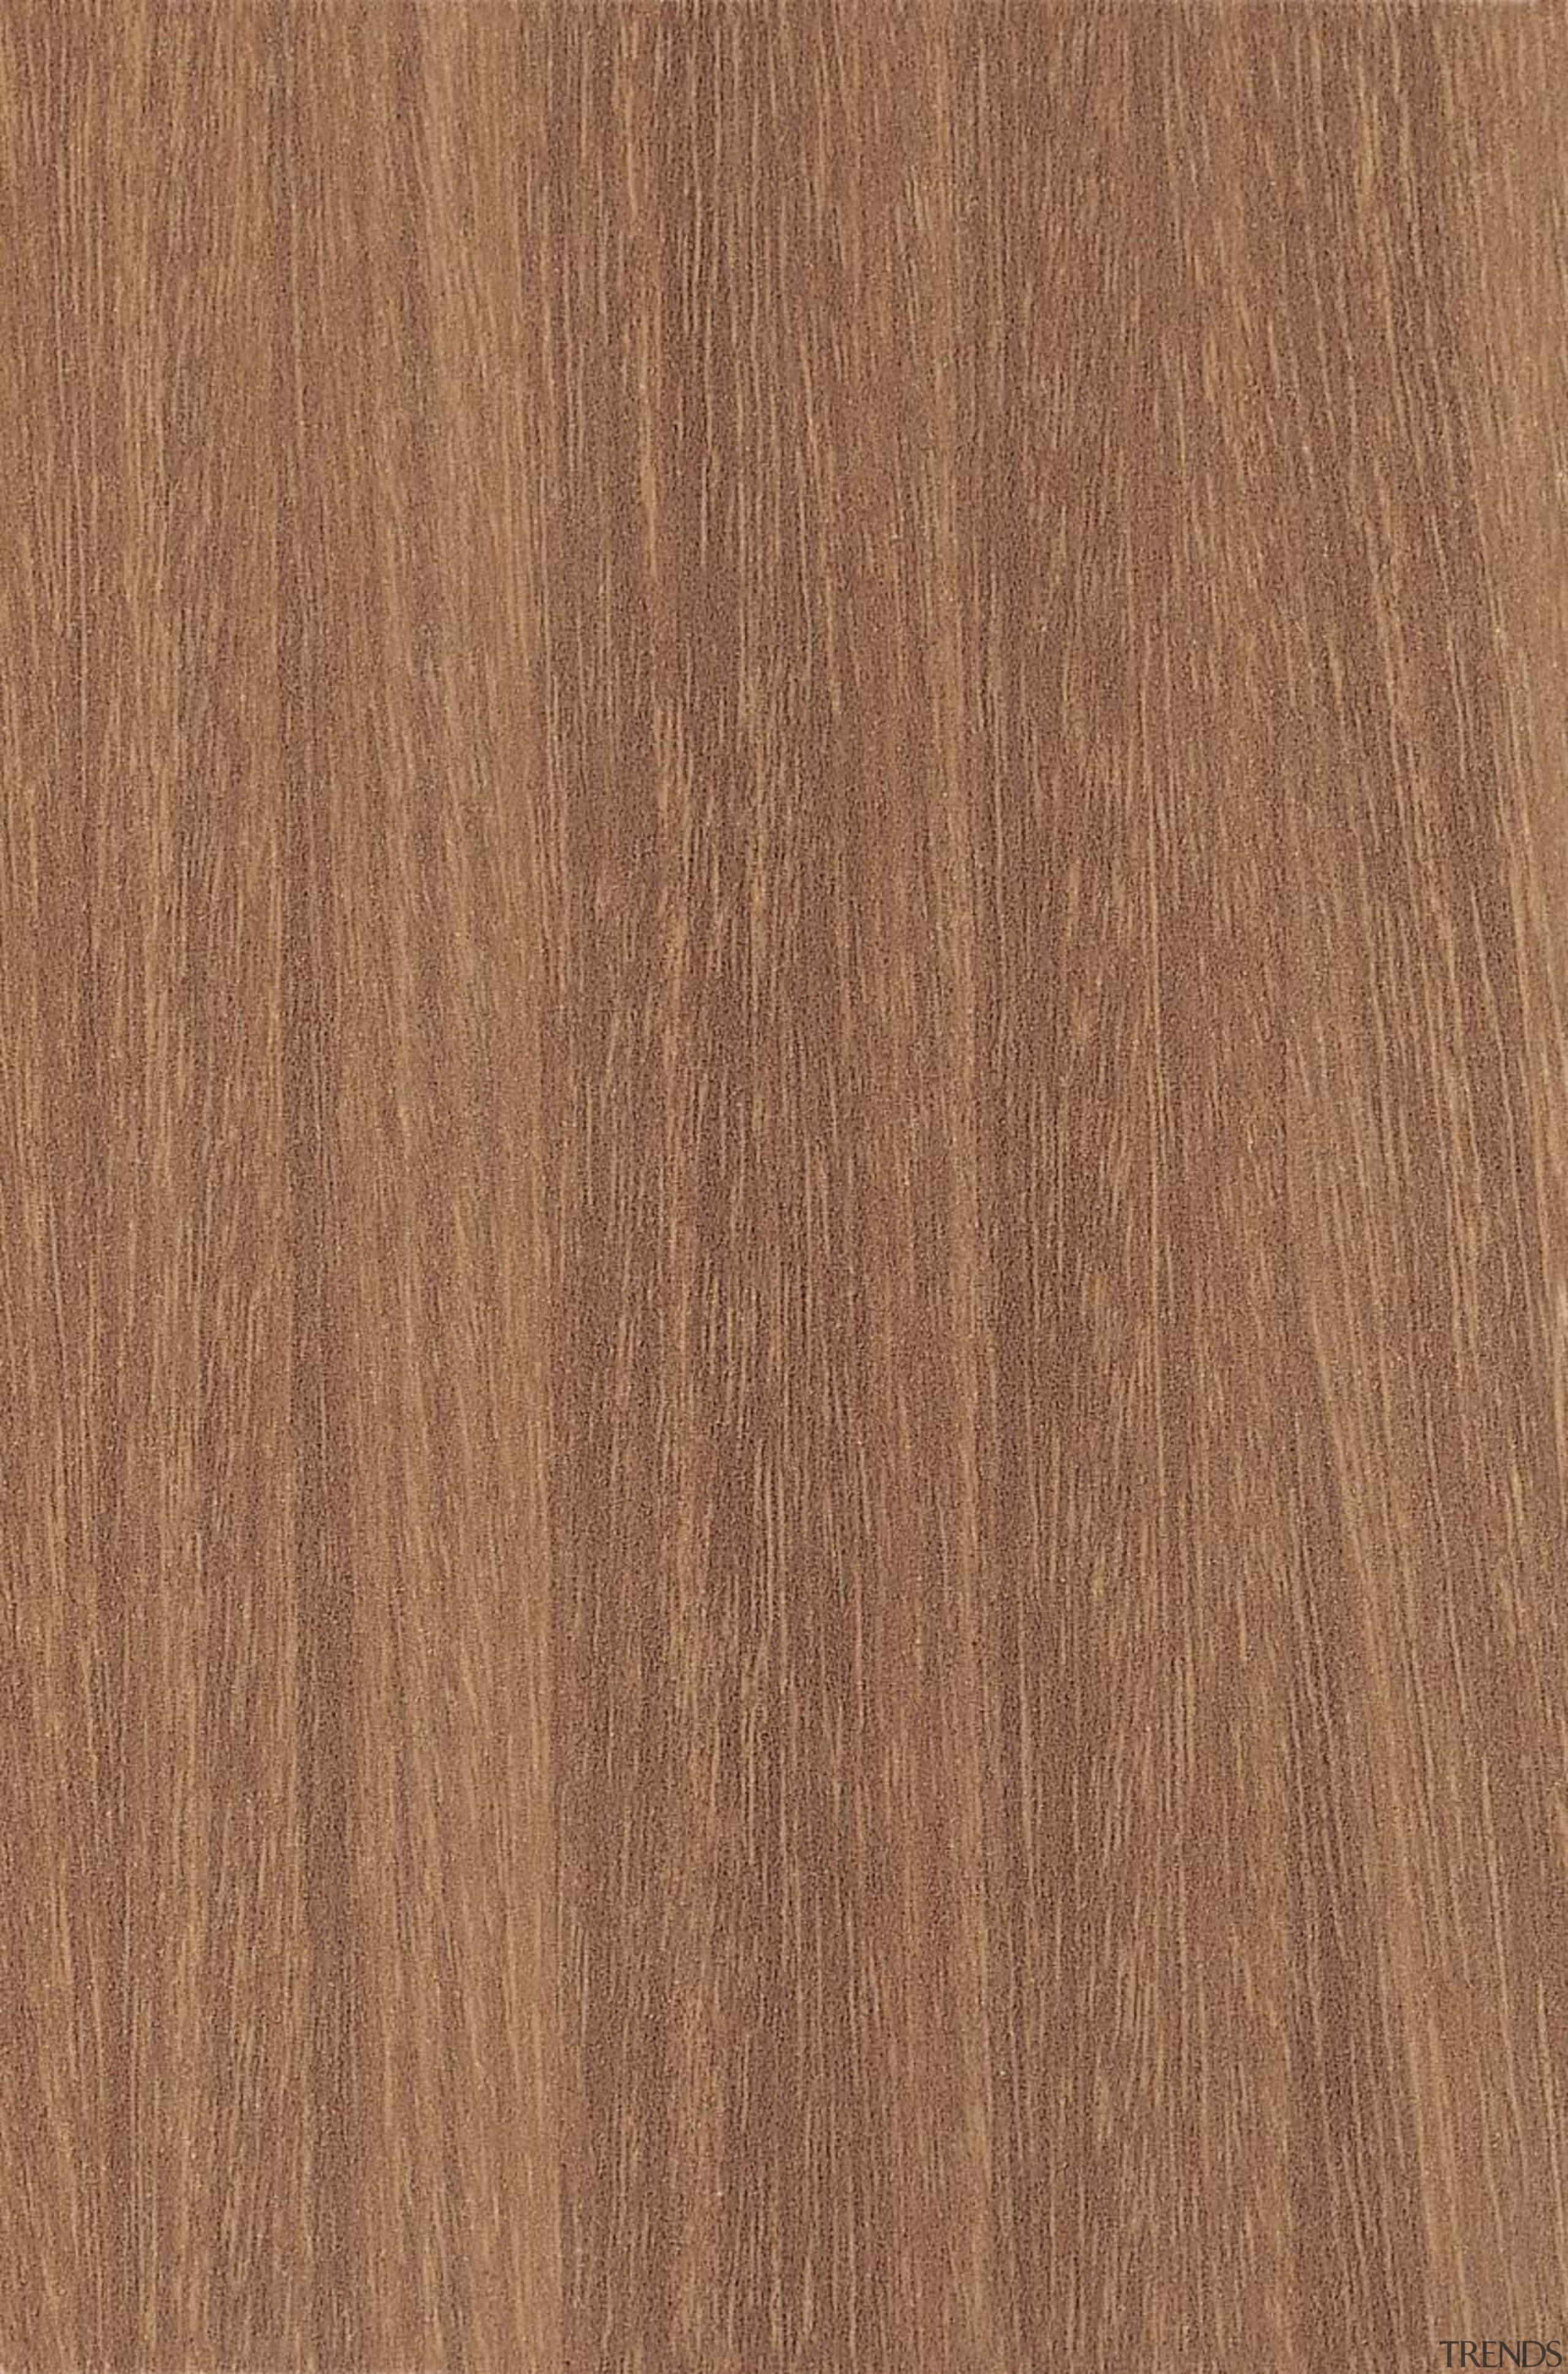 Formica Oiled Legno - Formica Oiled Legno - brown, floor, flooring, hardwood, laminate flooring, plank, plywood, wood, wood flooring, wood stain, brown